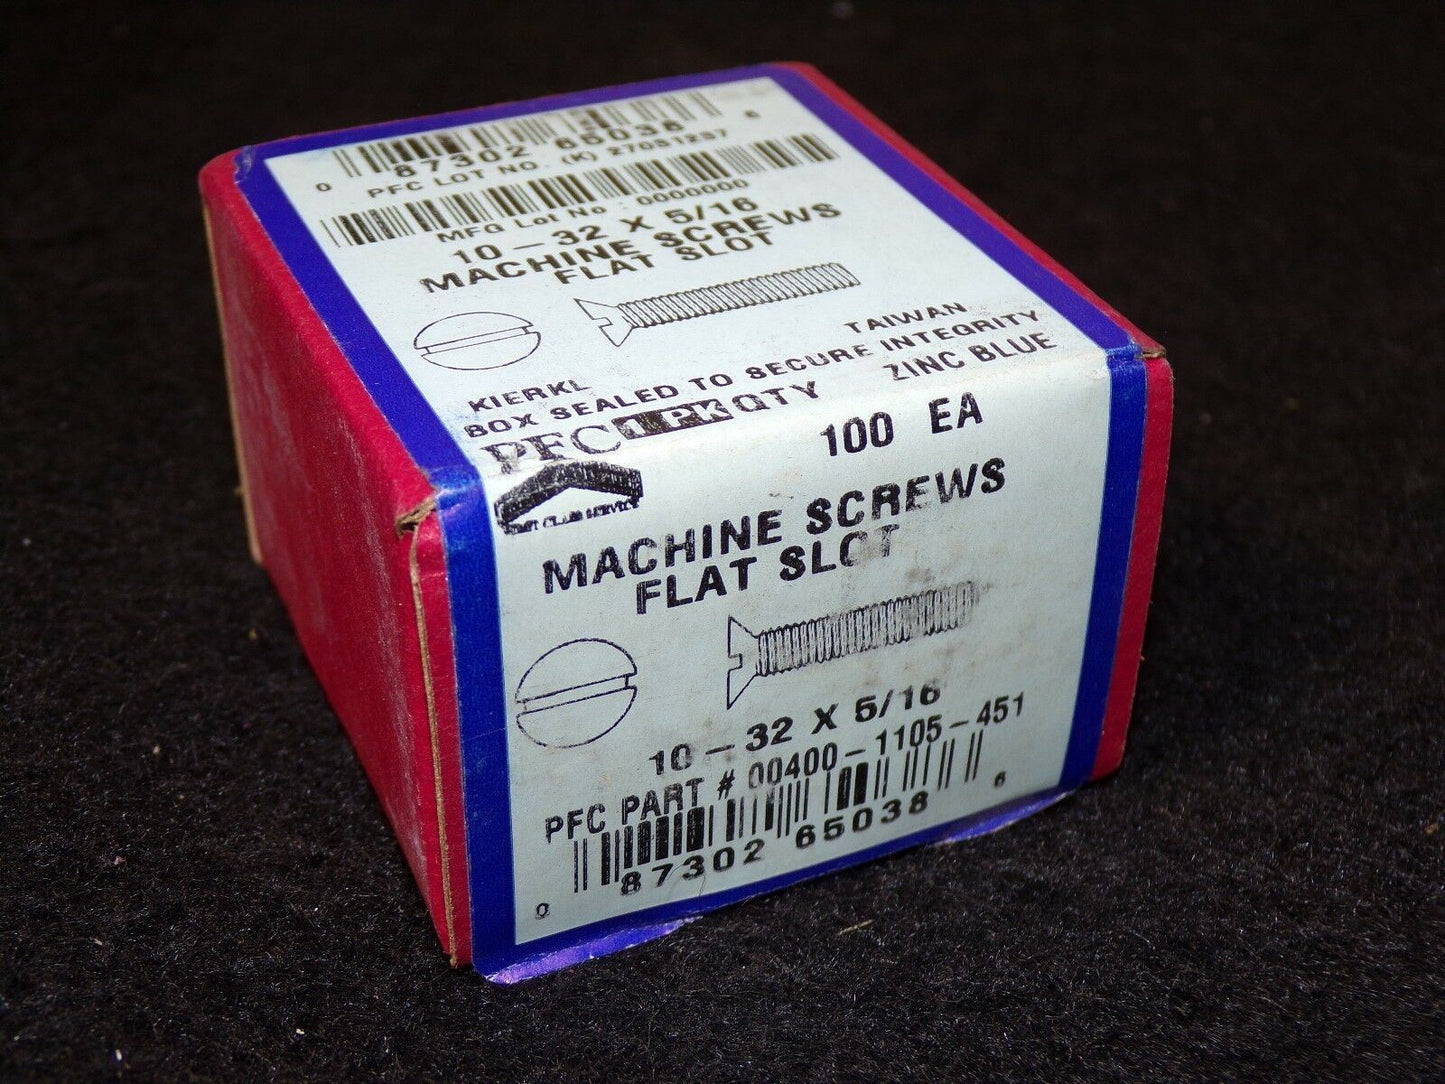 10-32 x 5/16" Machine Screw Flat Slotted 2FE88 QTY-100 (183345710119-2F19 (F))